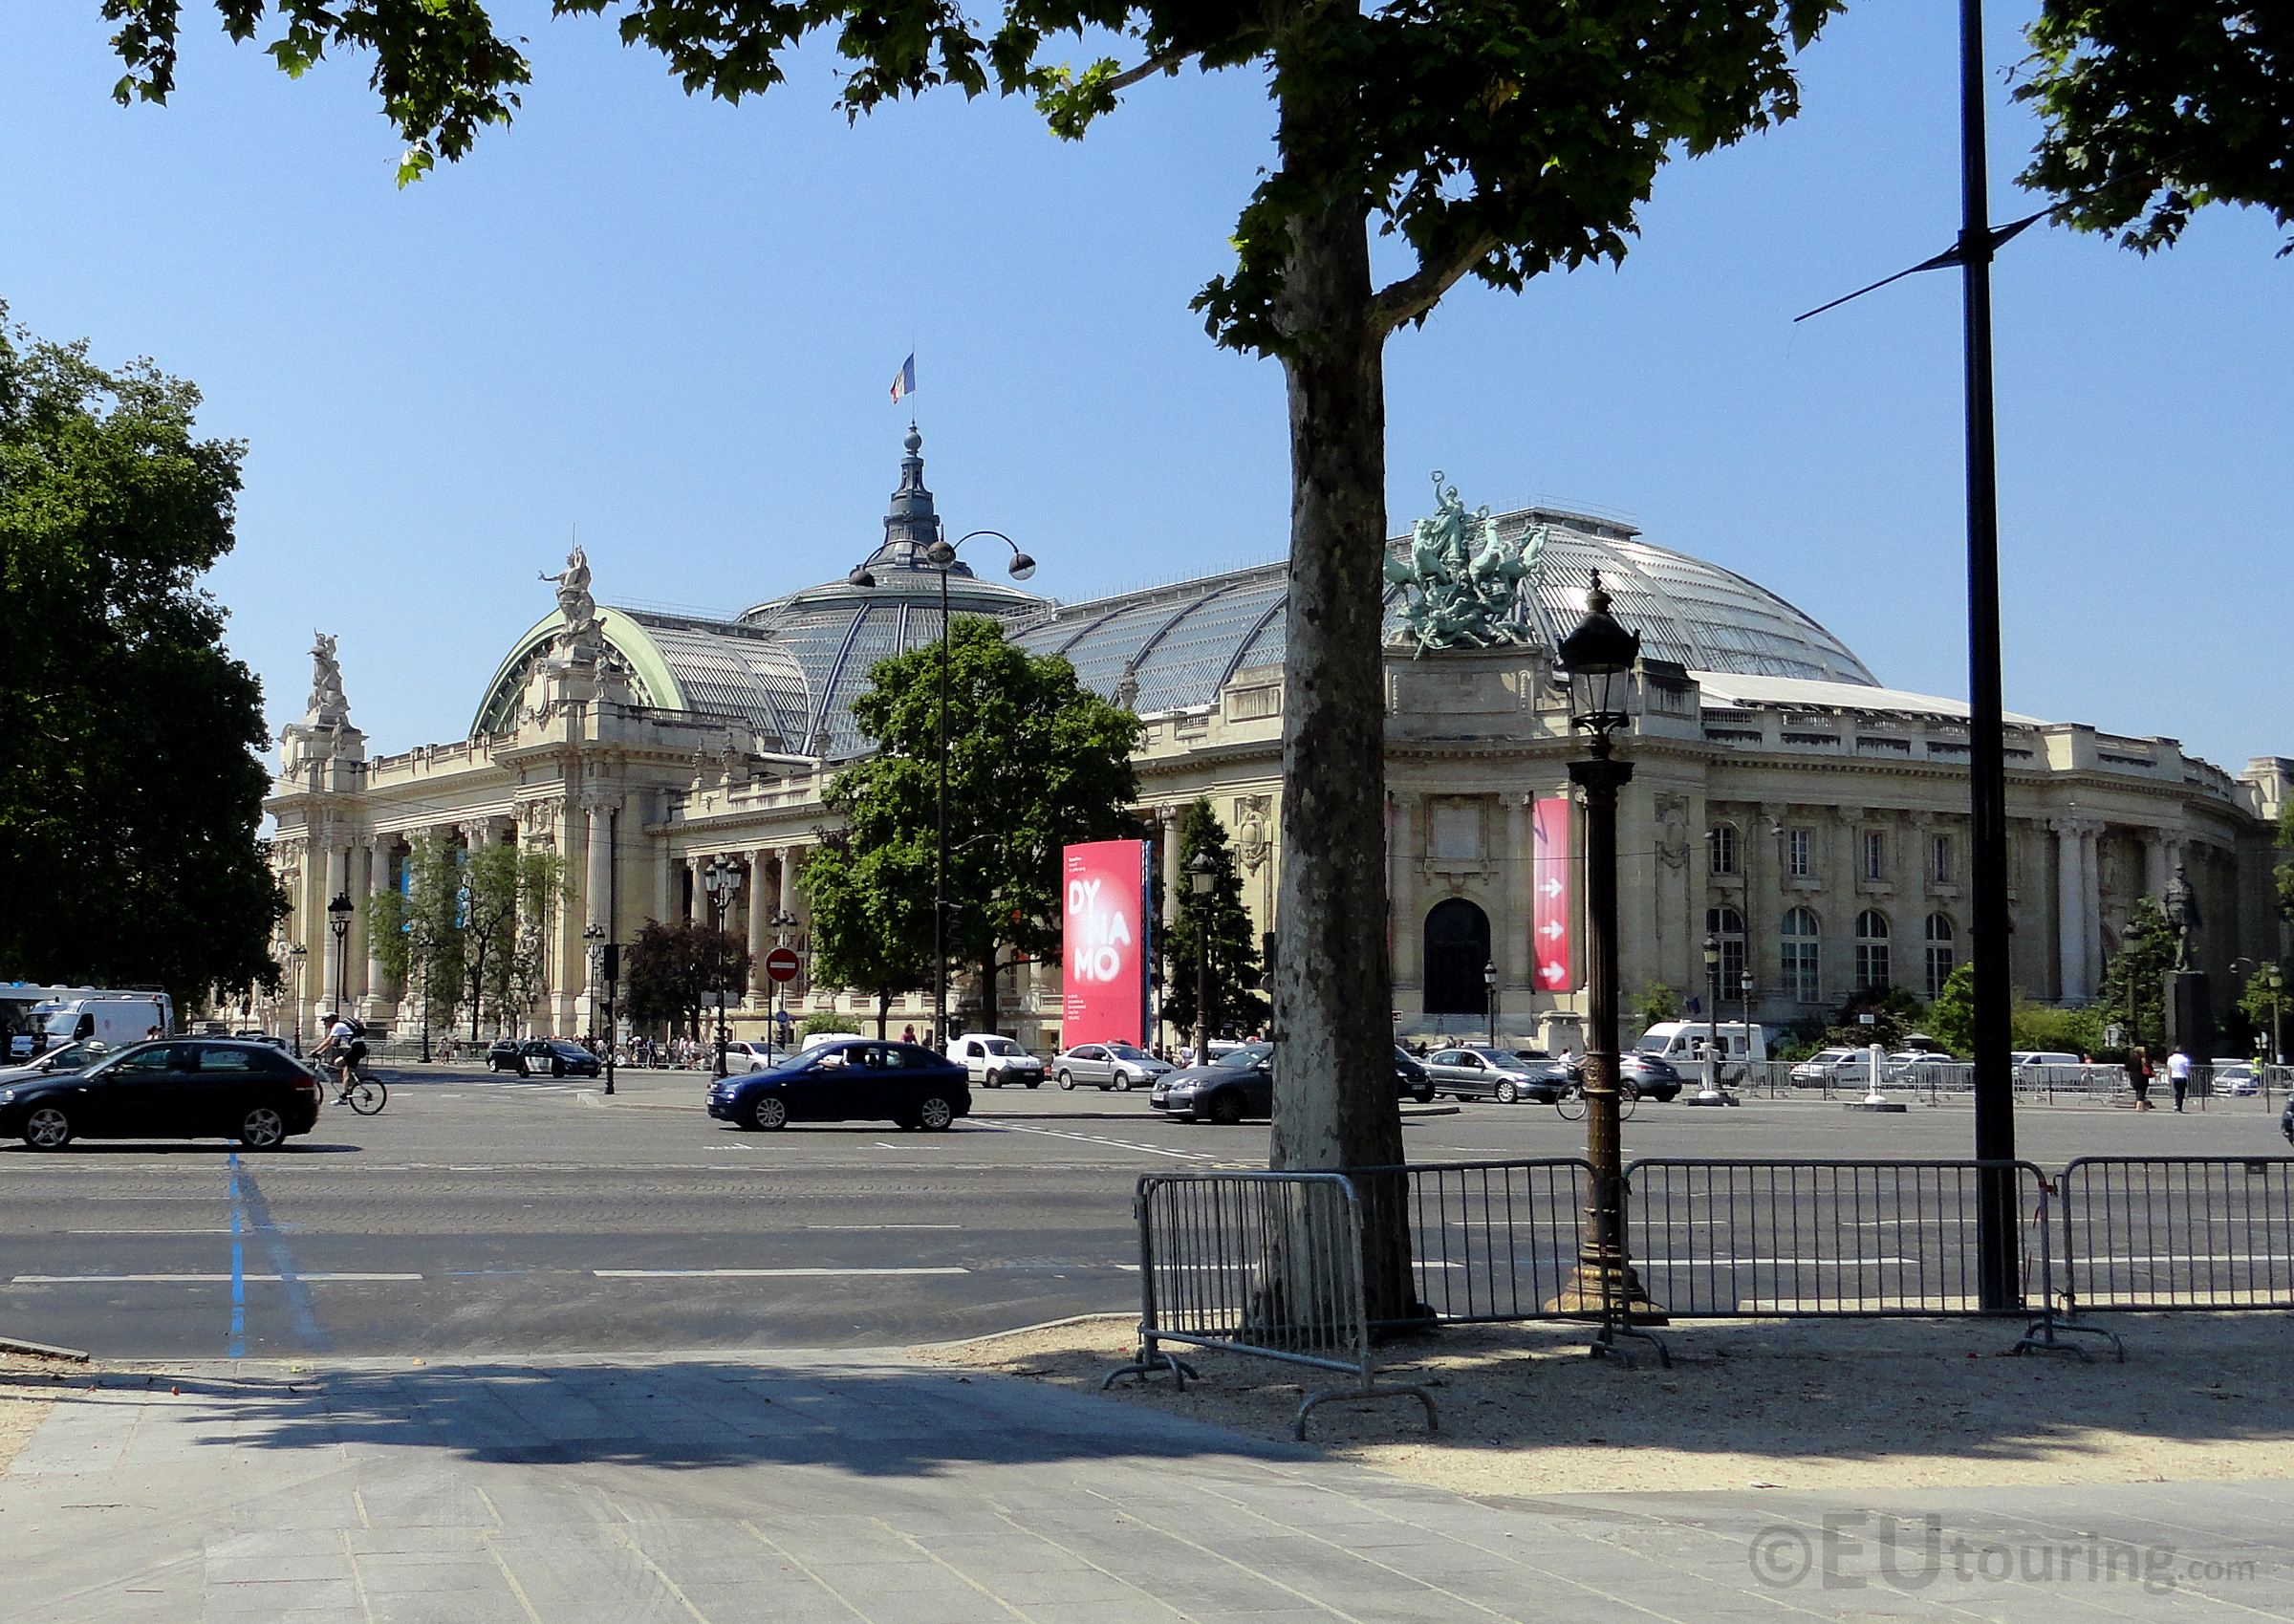 The whole Grand Palais